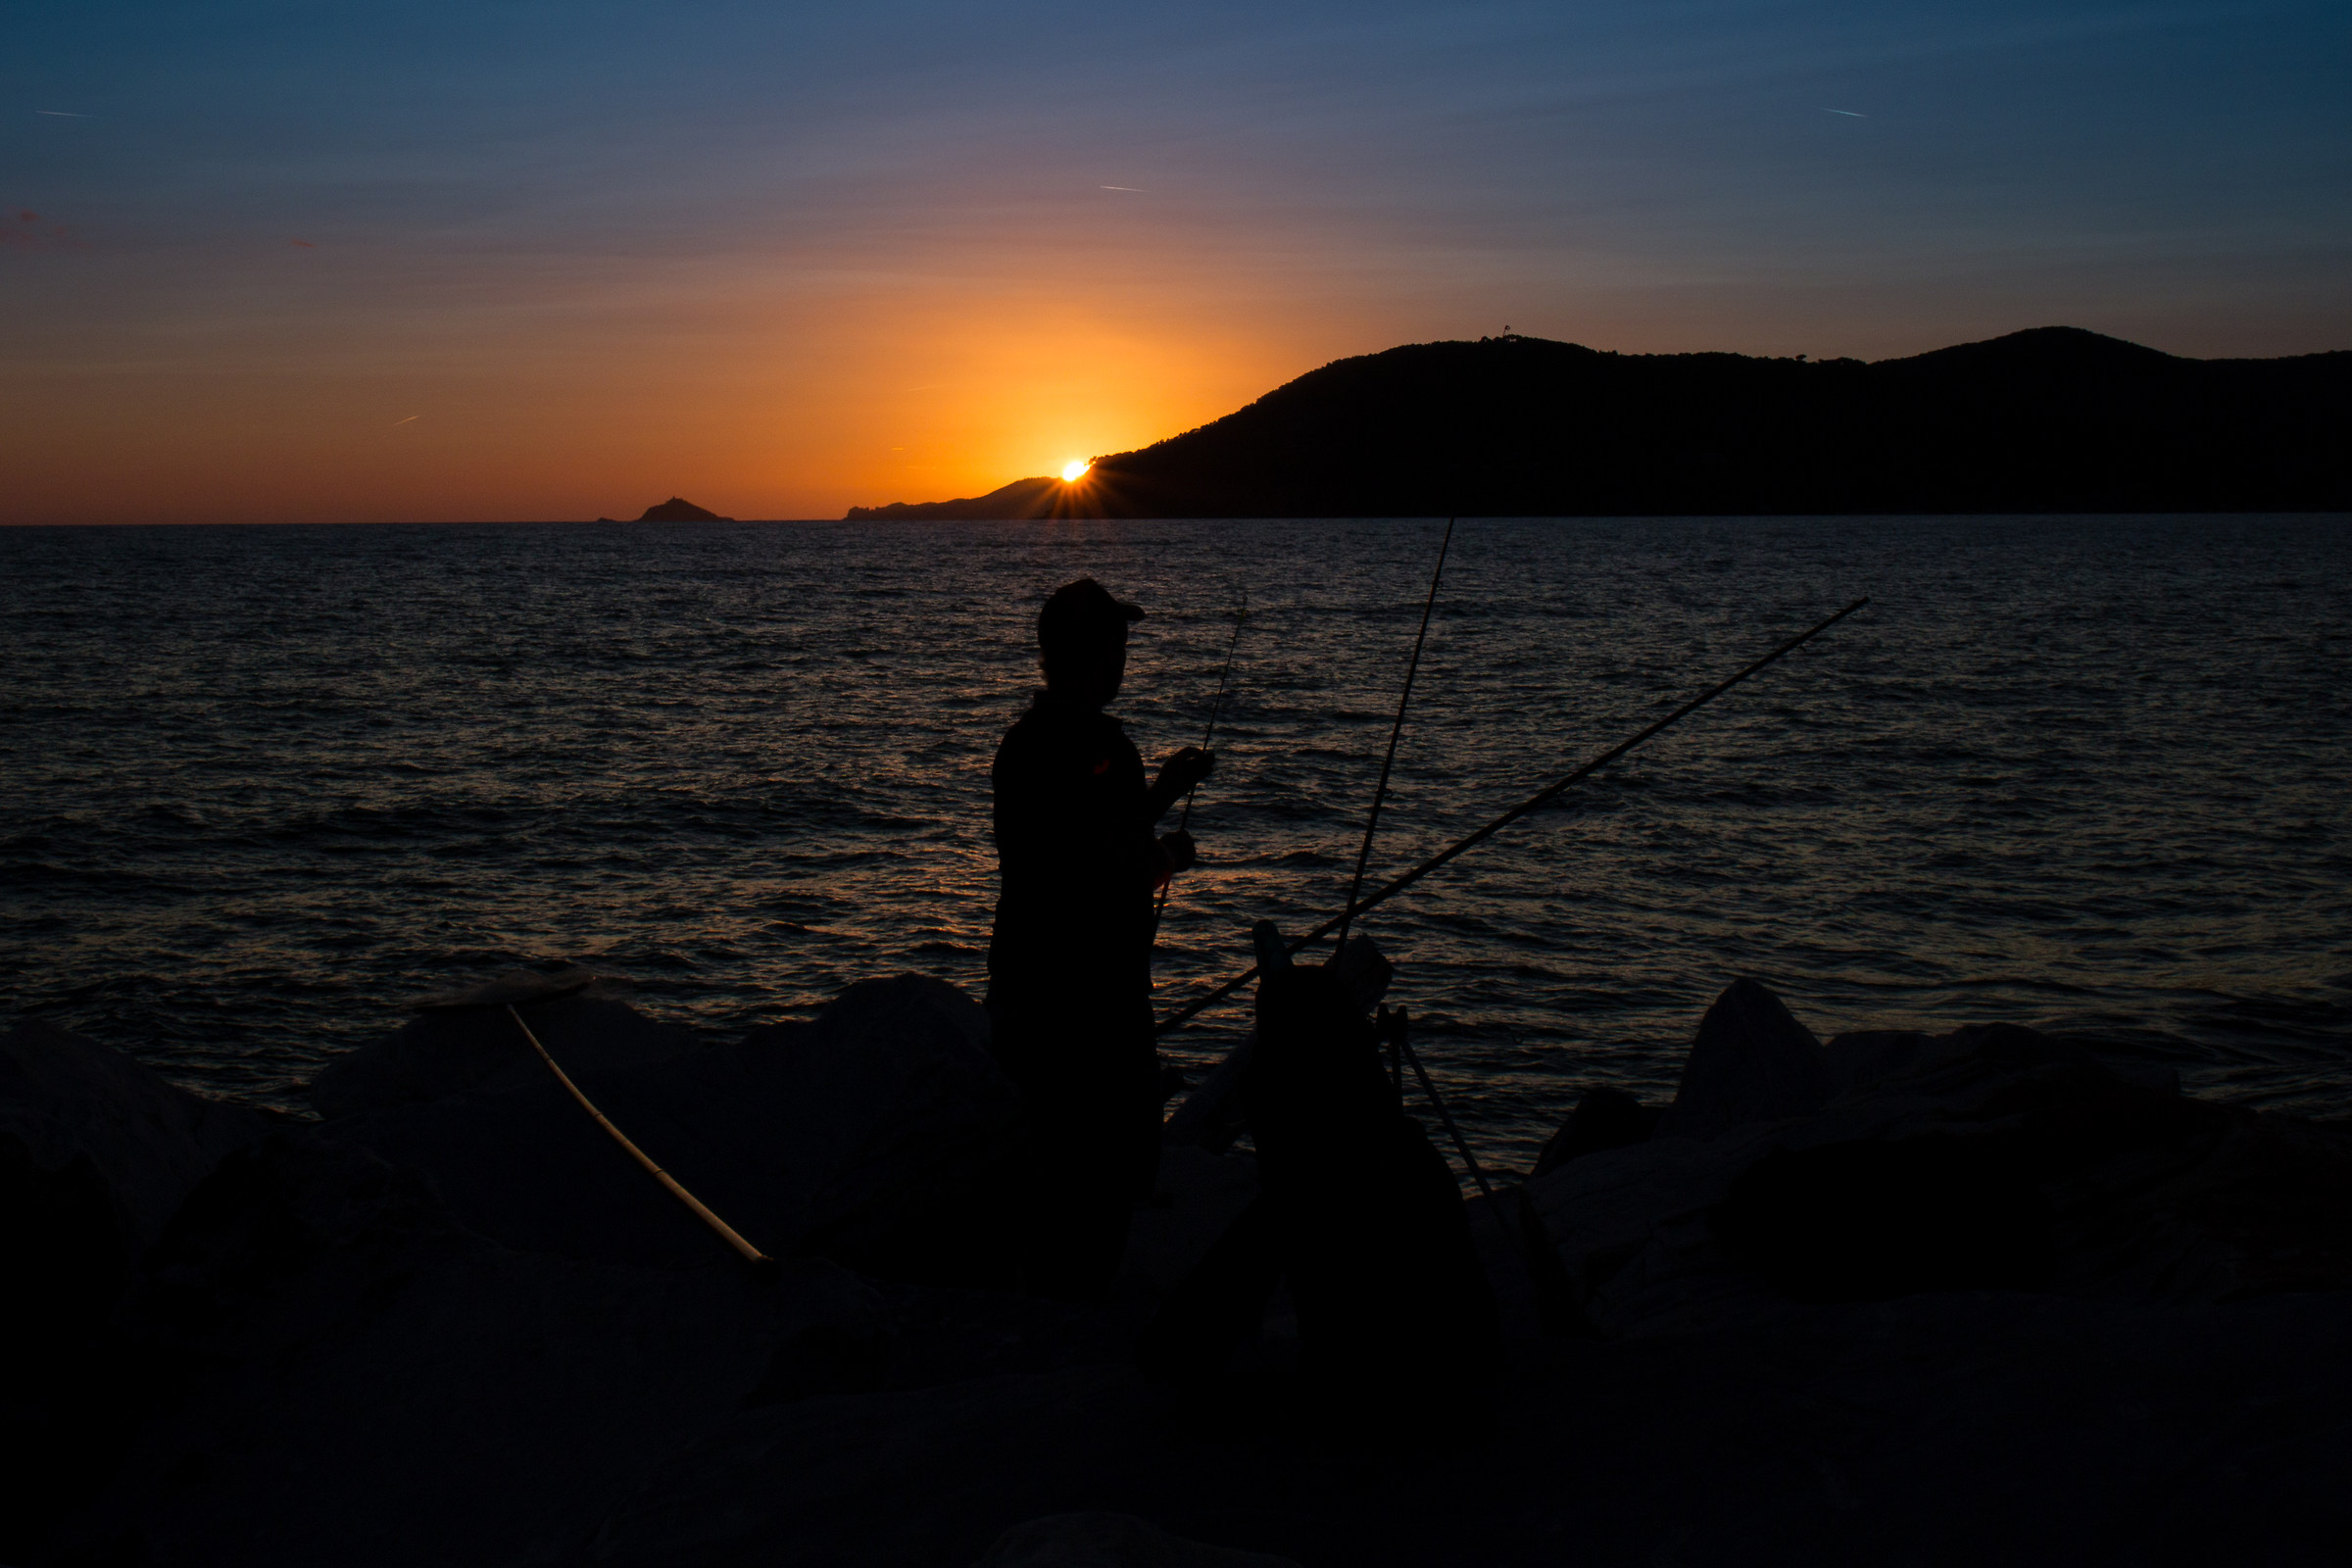 The sunset fisherman...